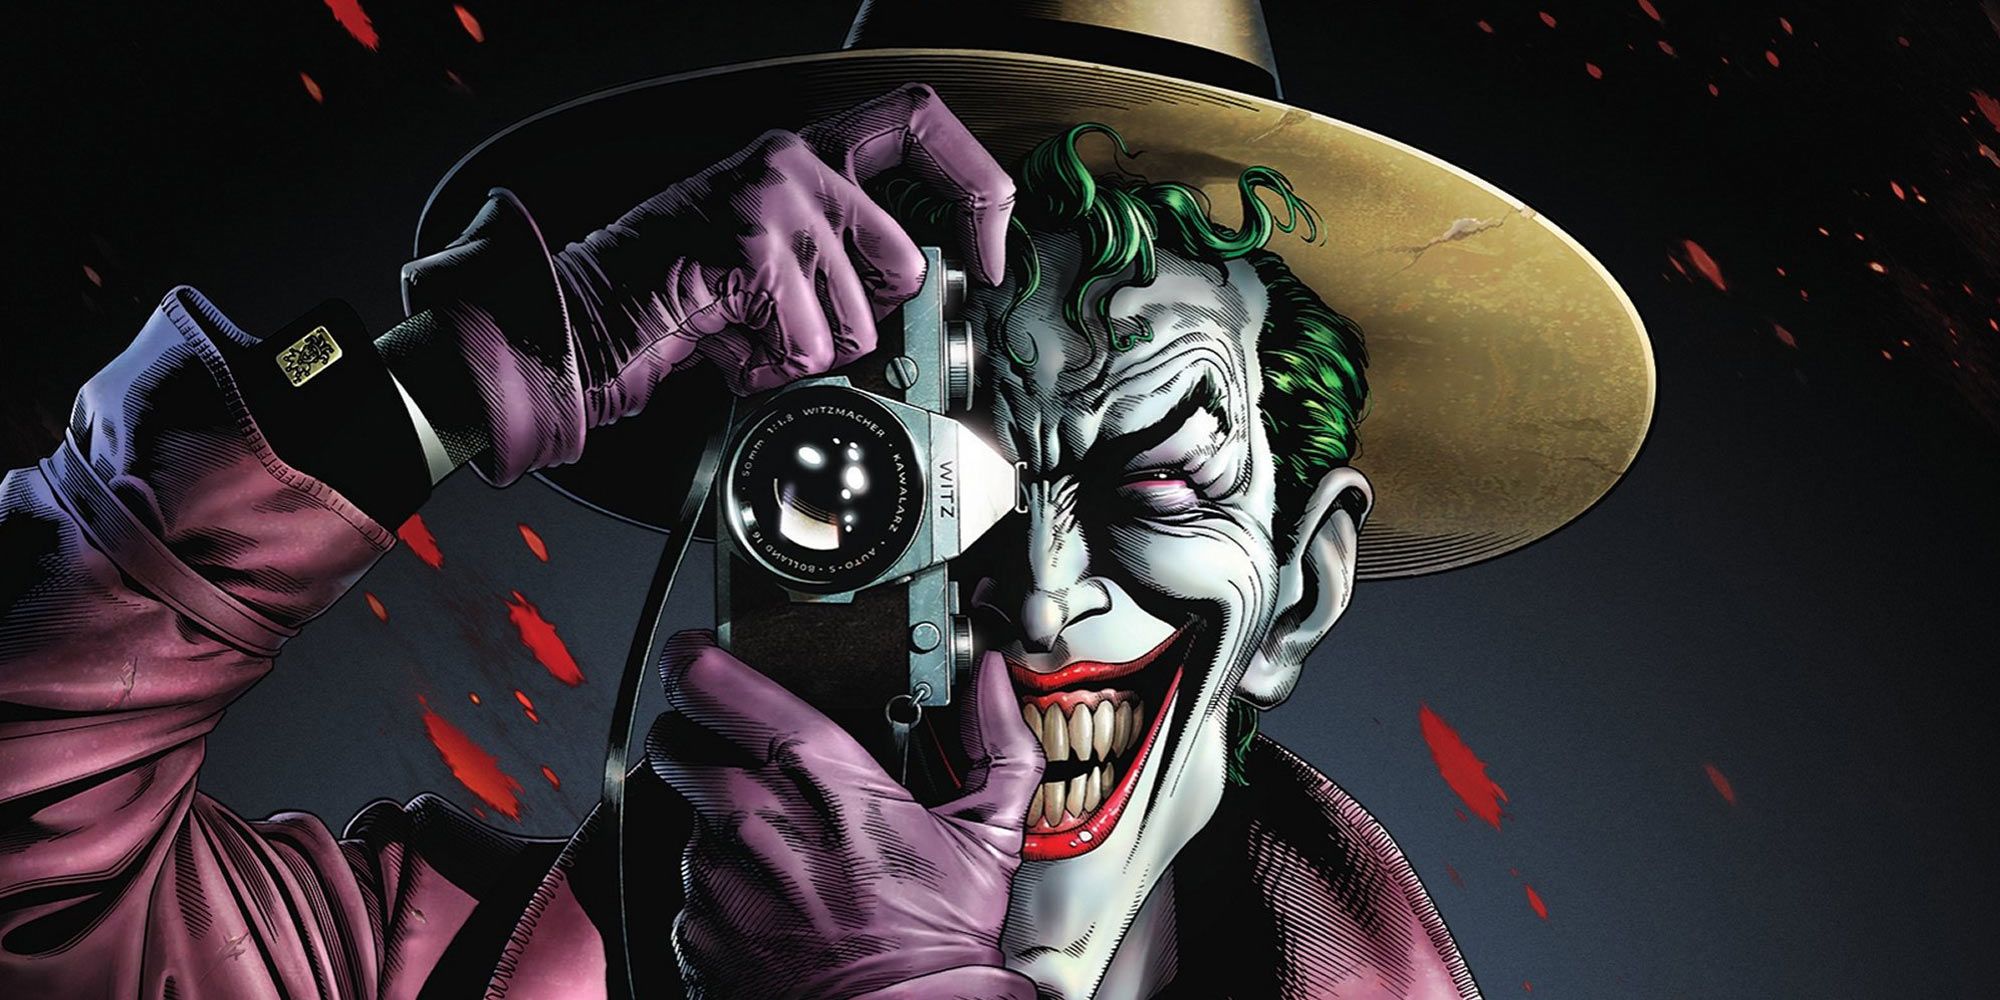 Joker holing a camera on the iconic Killing Joke cover.